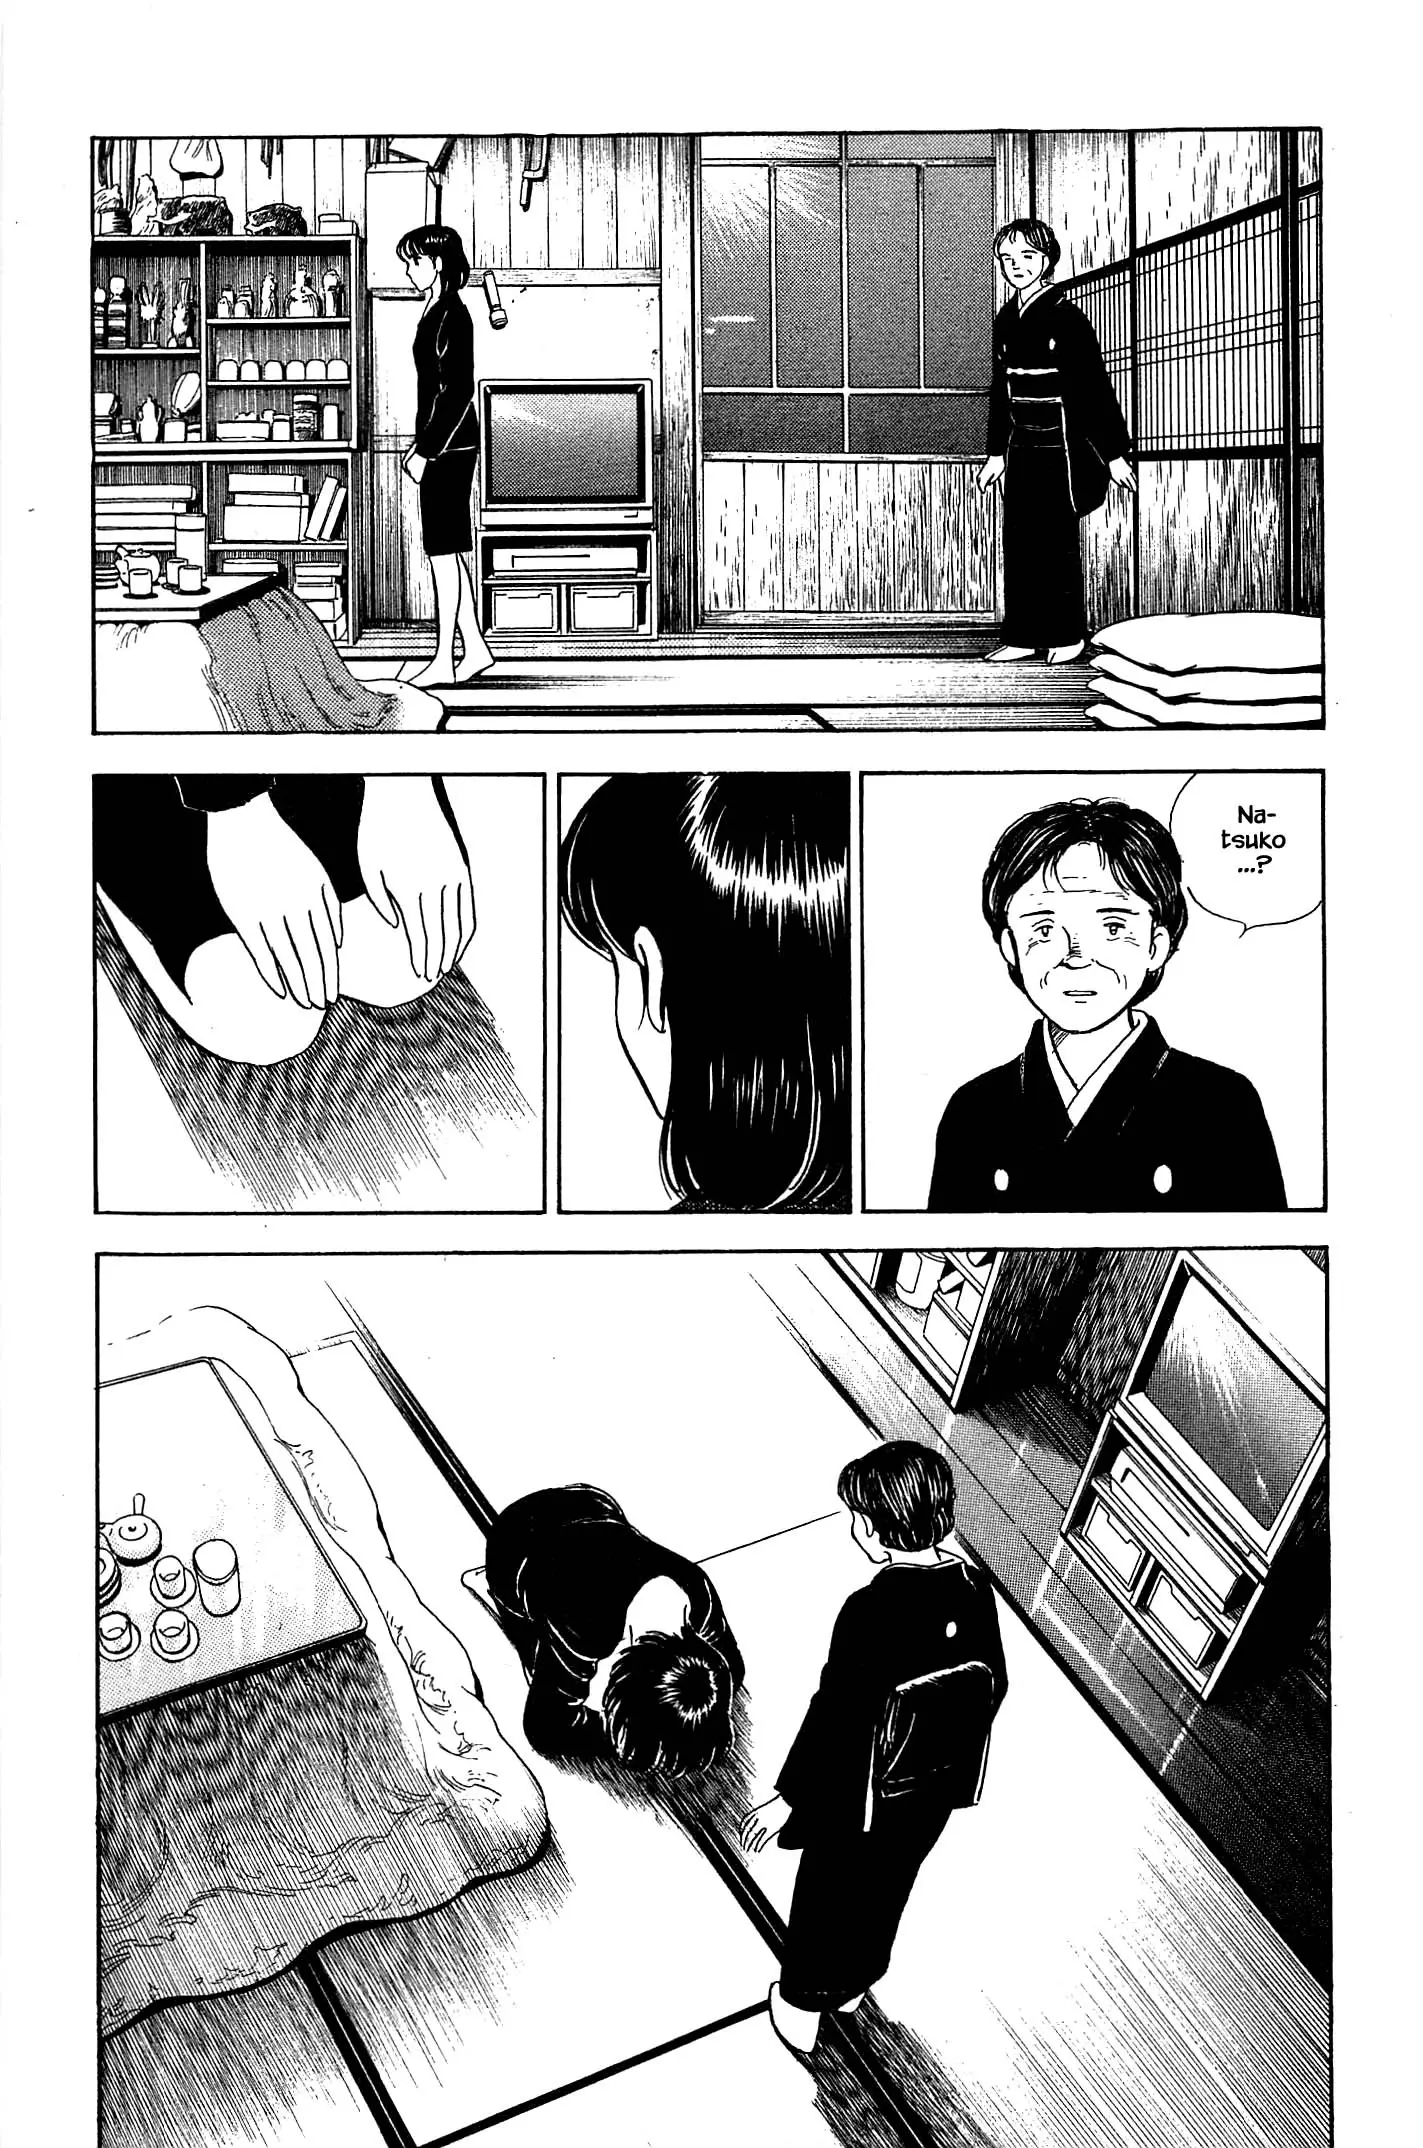 Natsuko's Sake - 131 page 9-c2adca12